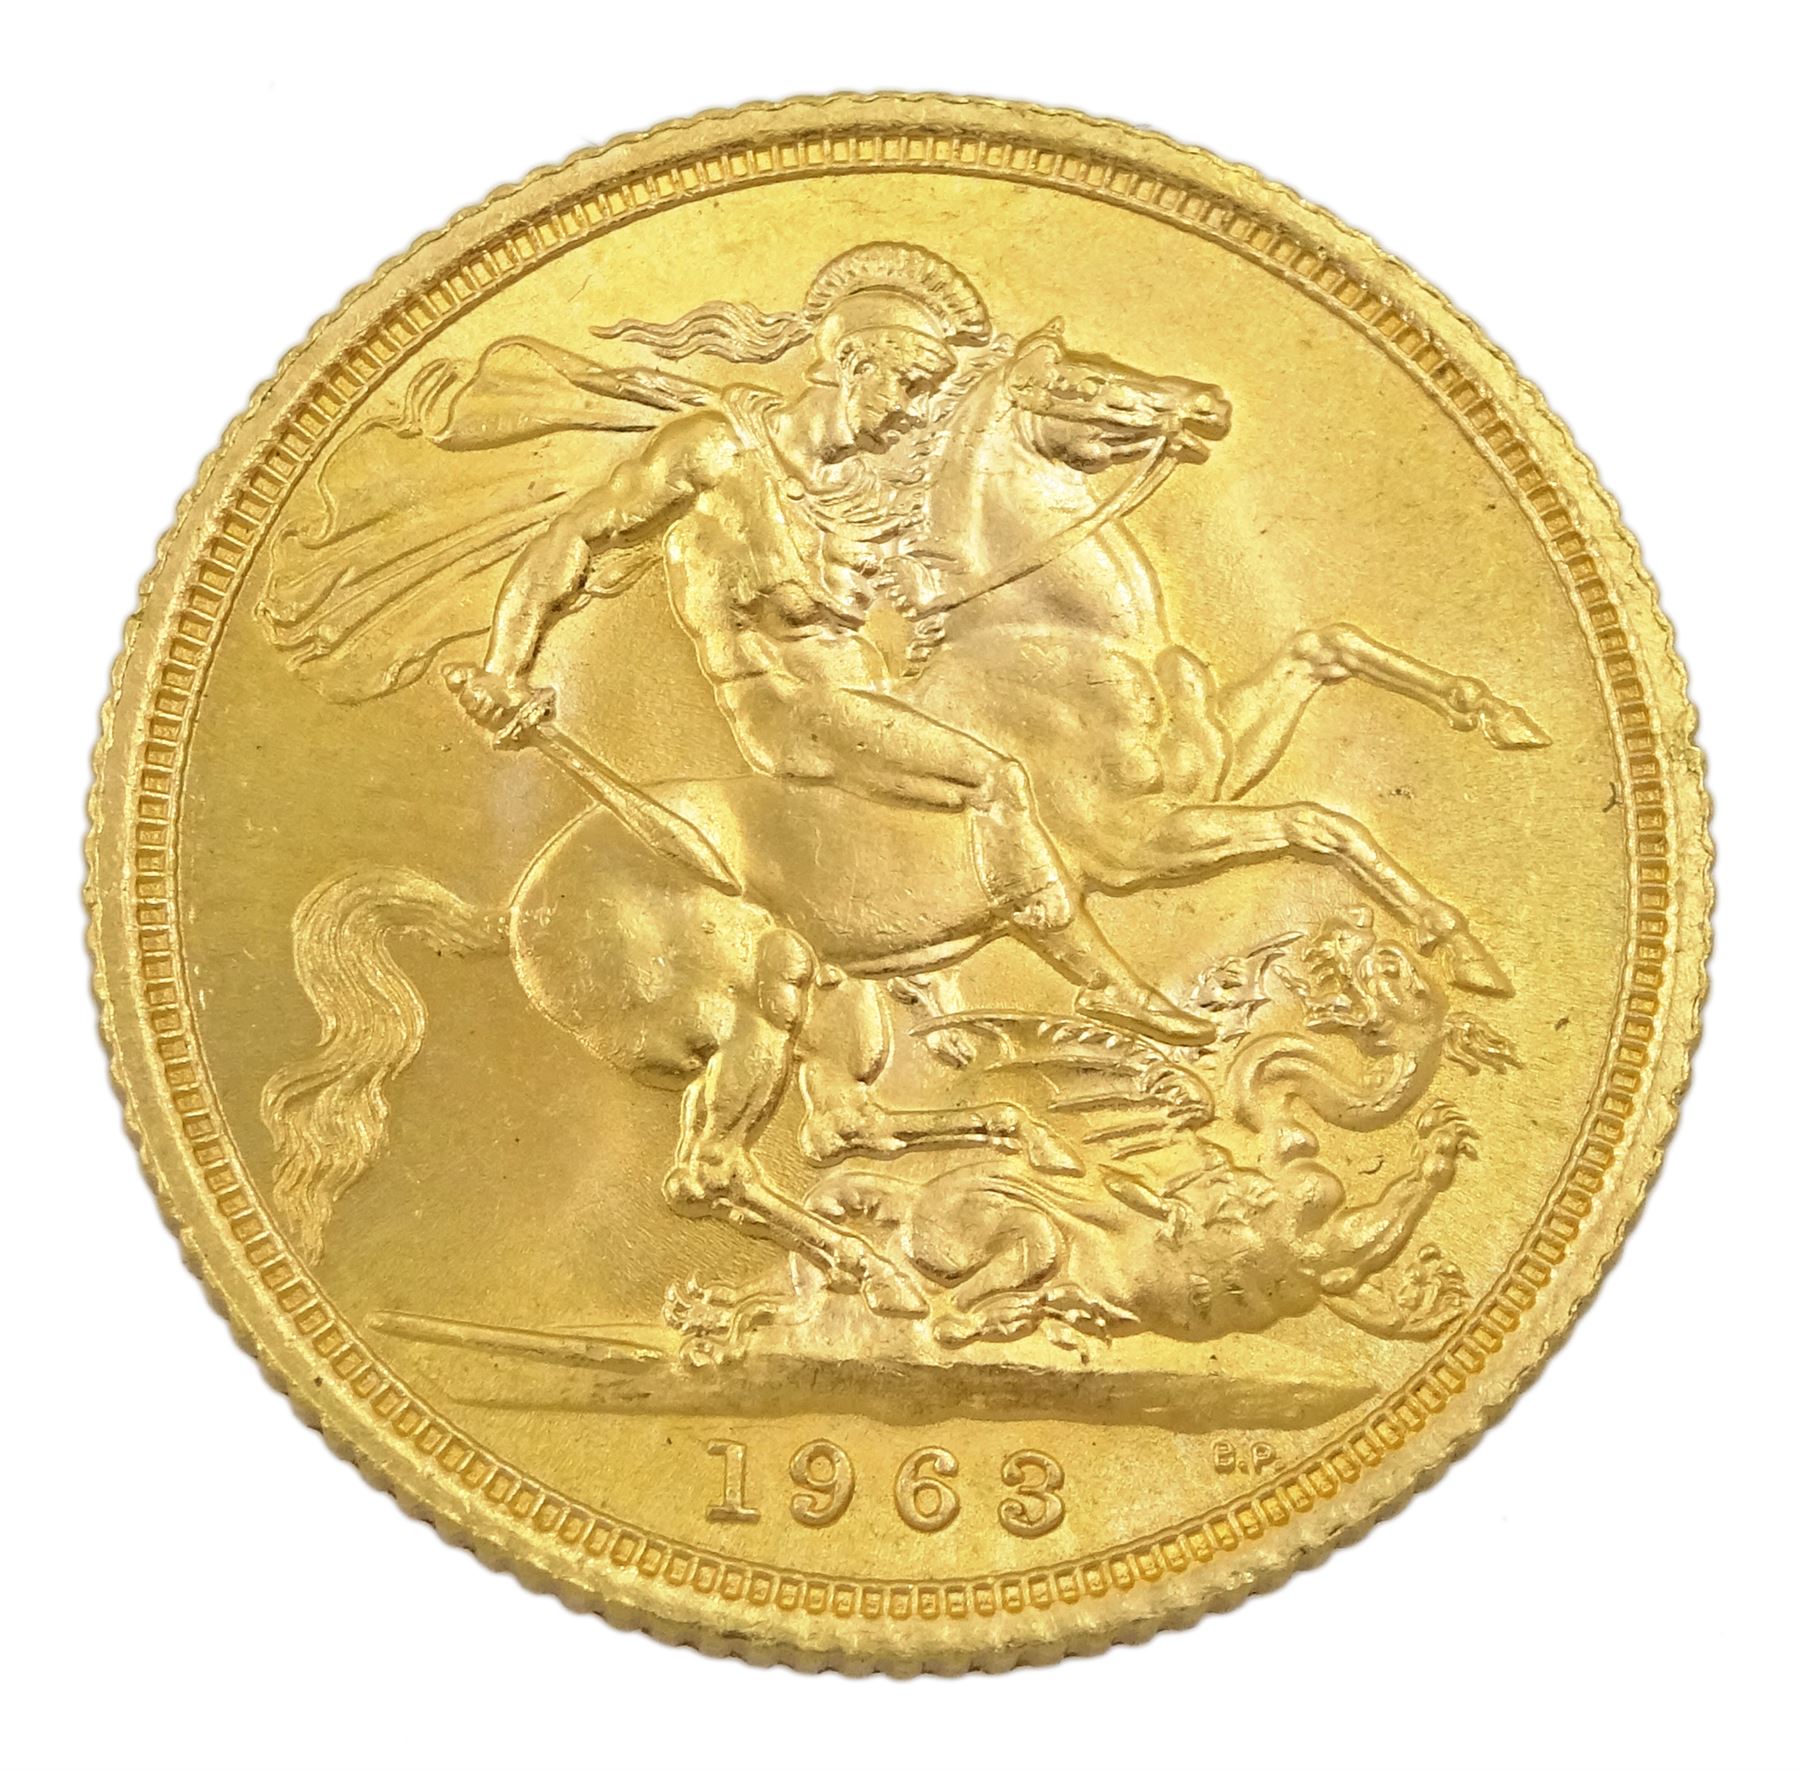 Queen Elizabeth II 1963 gold full sovereign coin - Image 3 of 3